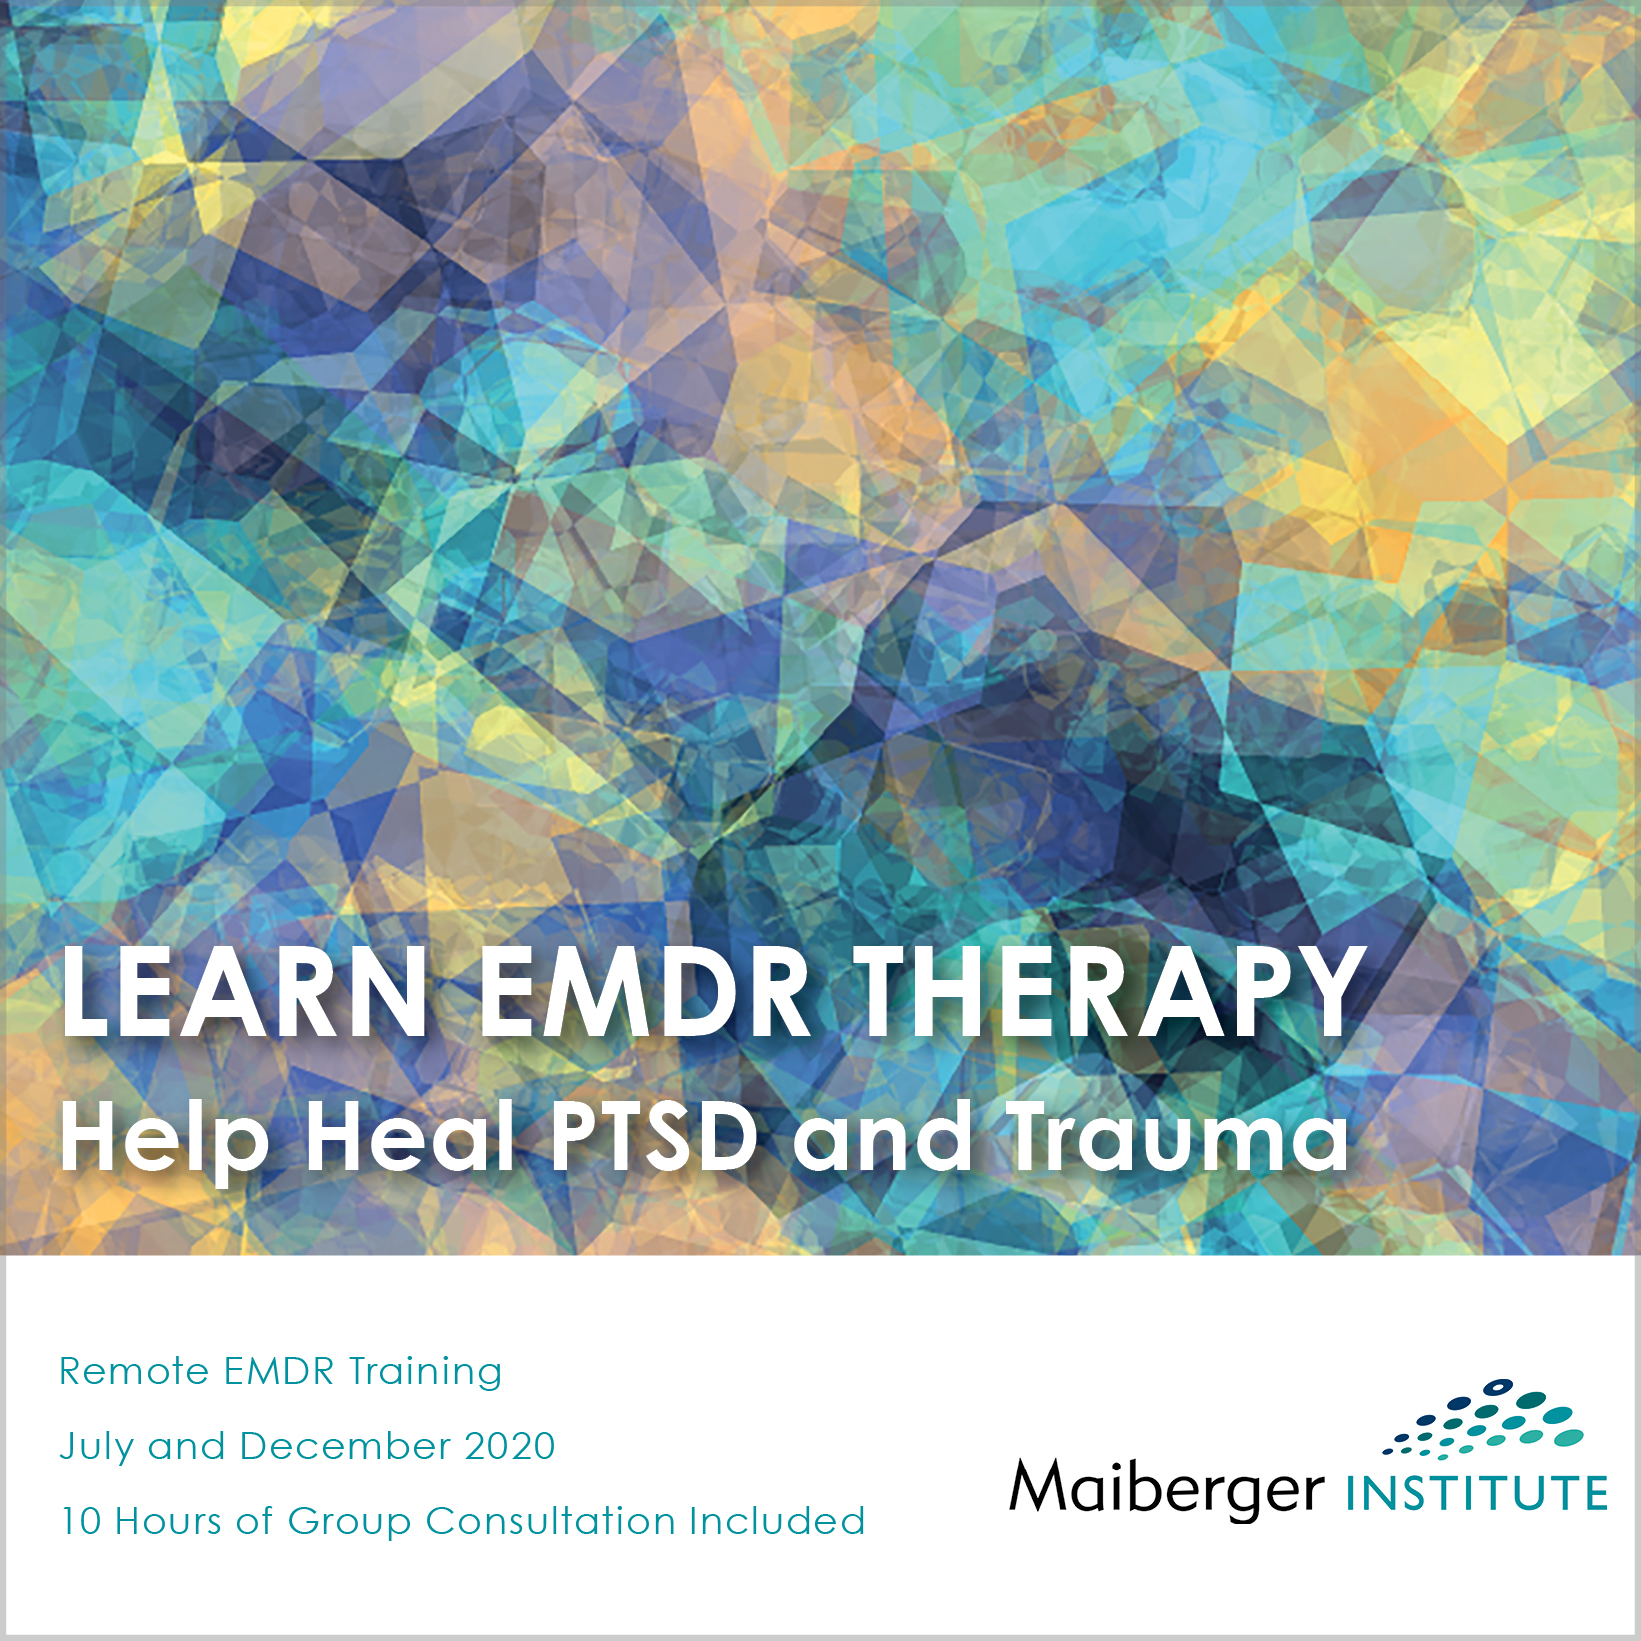 Remote EMDR Training - July and December 2020 - Maiberger Institute